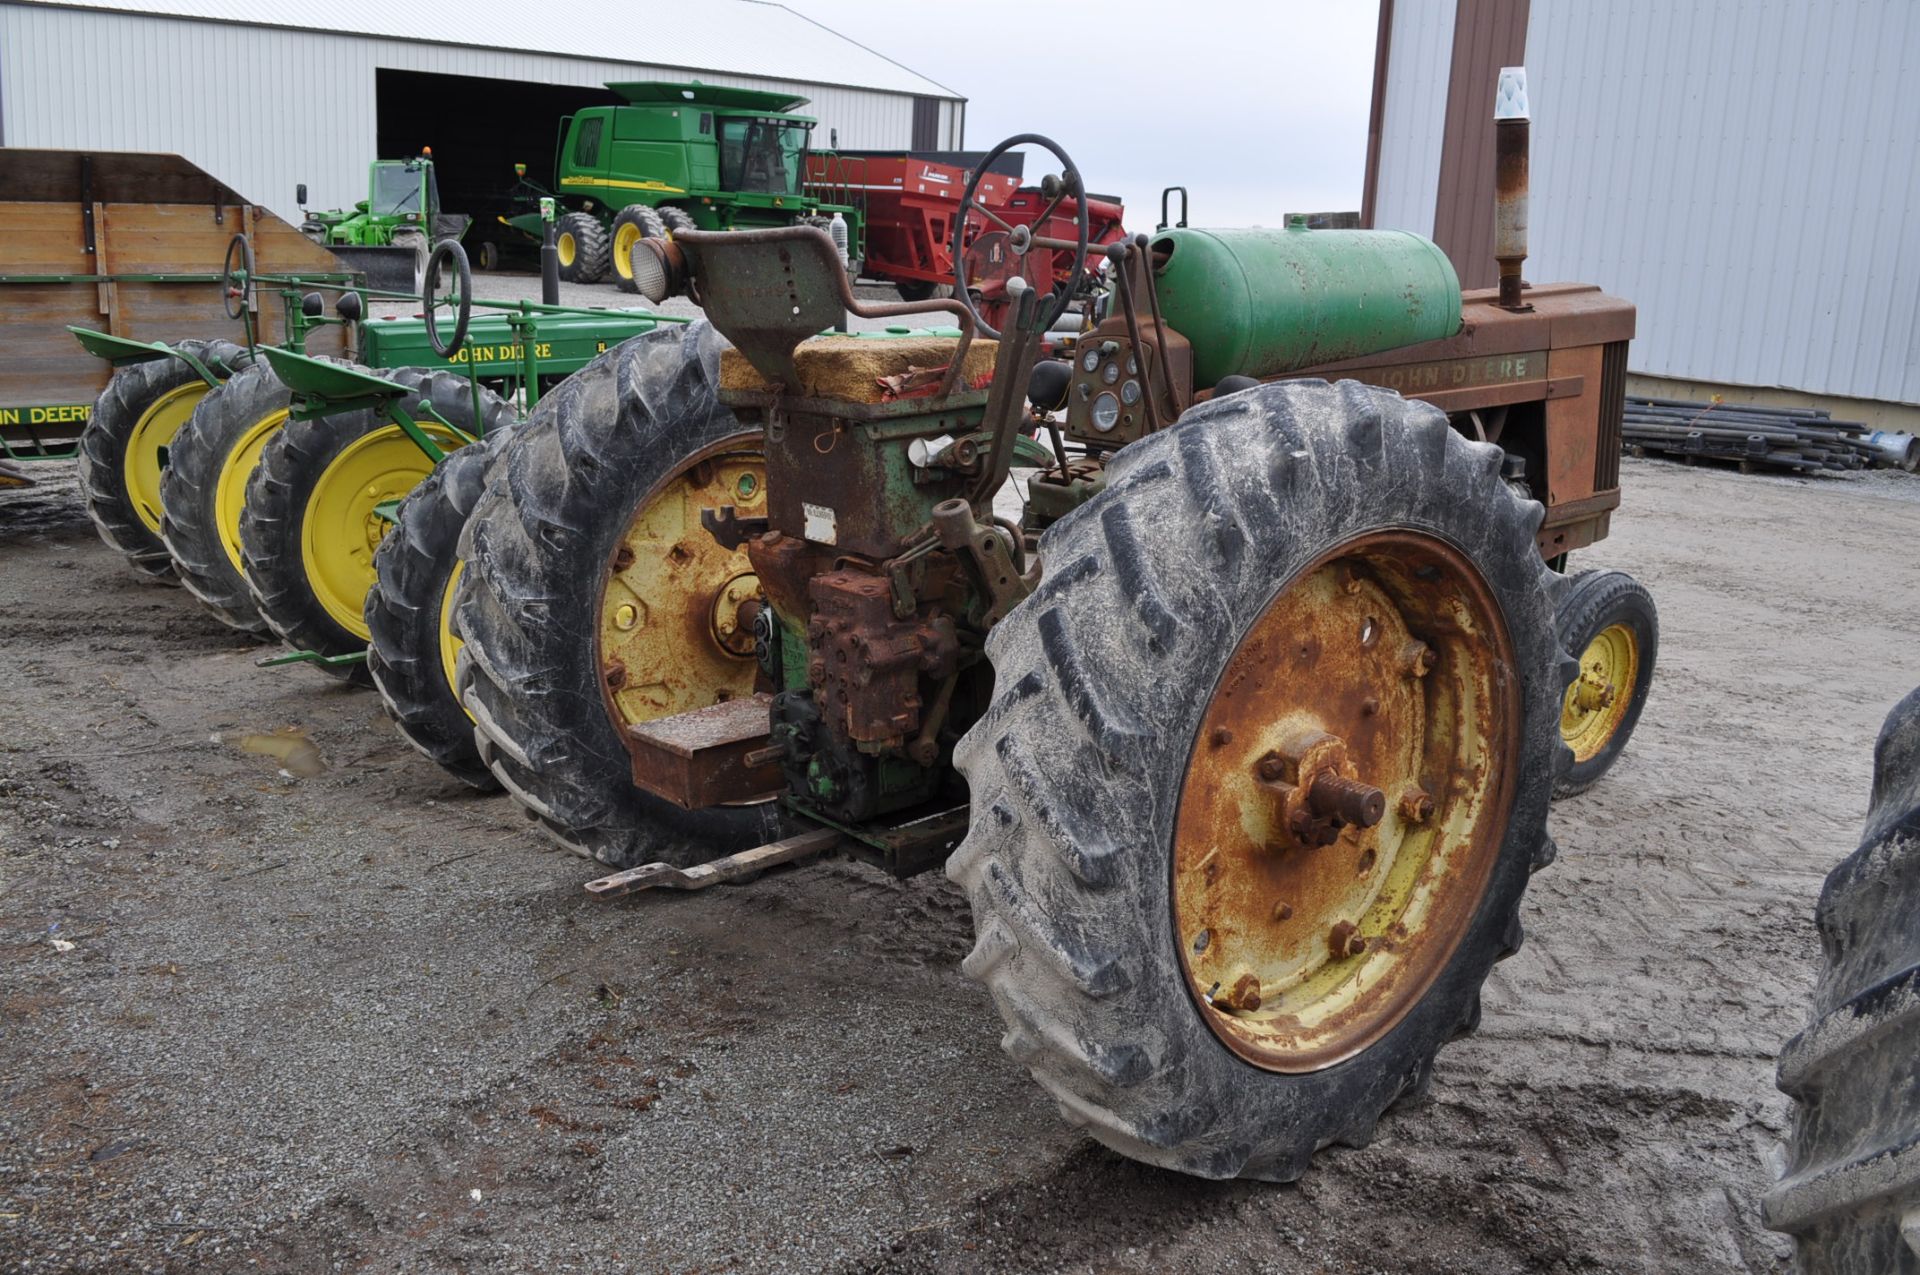 John Deere 520 tractor, LP, 13.6-12-36 rear tires, 6.00-19 front tires, narrow front, power steering - Image 3 of 12